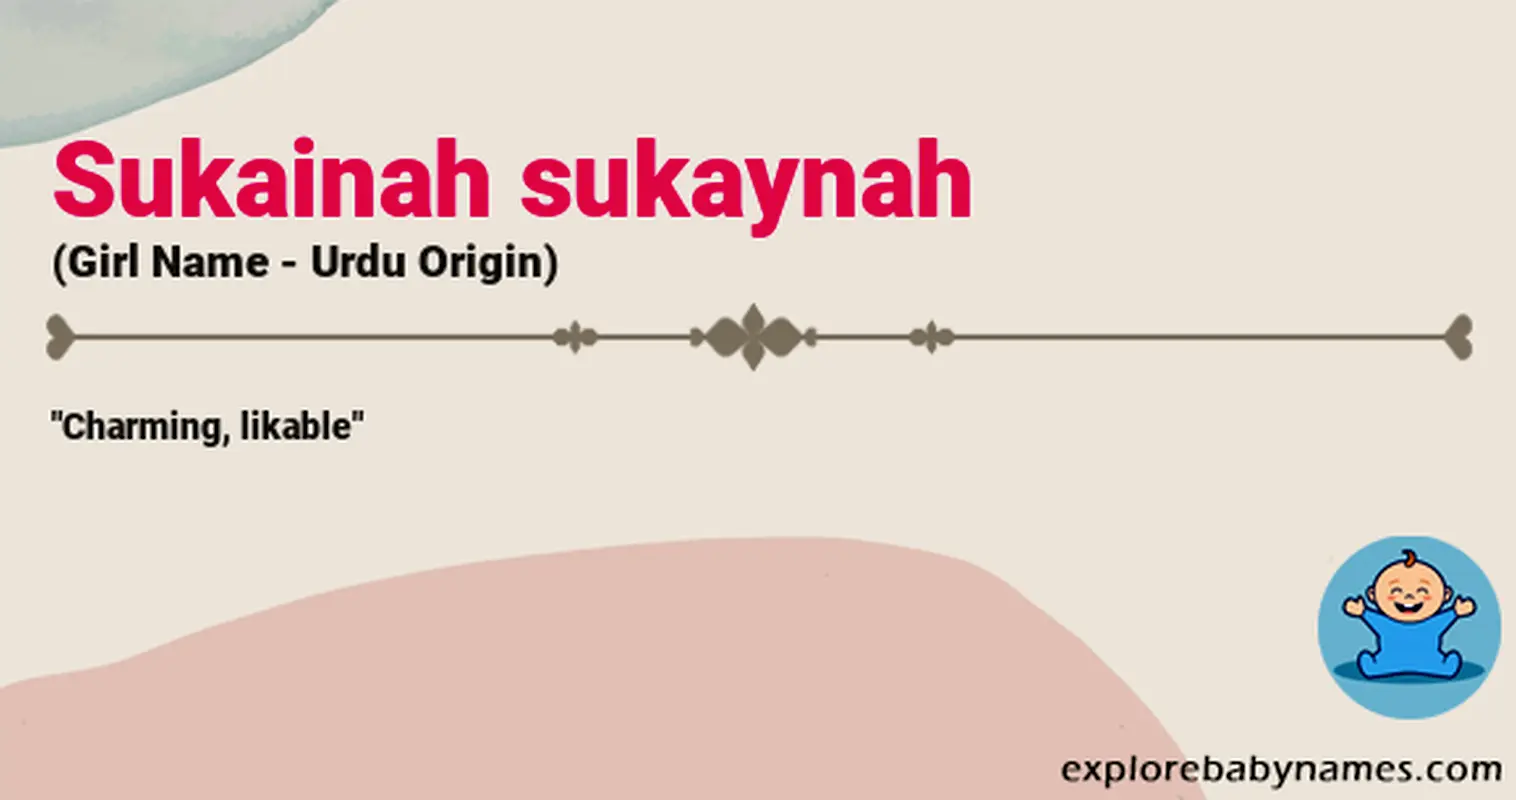 Meaning of Sukainah sukaynah